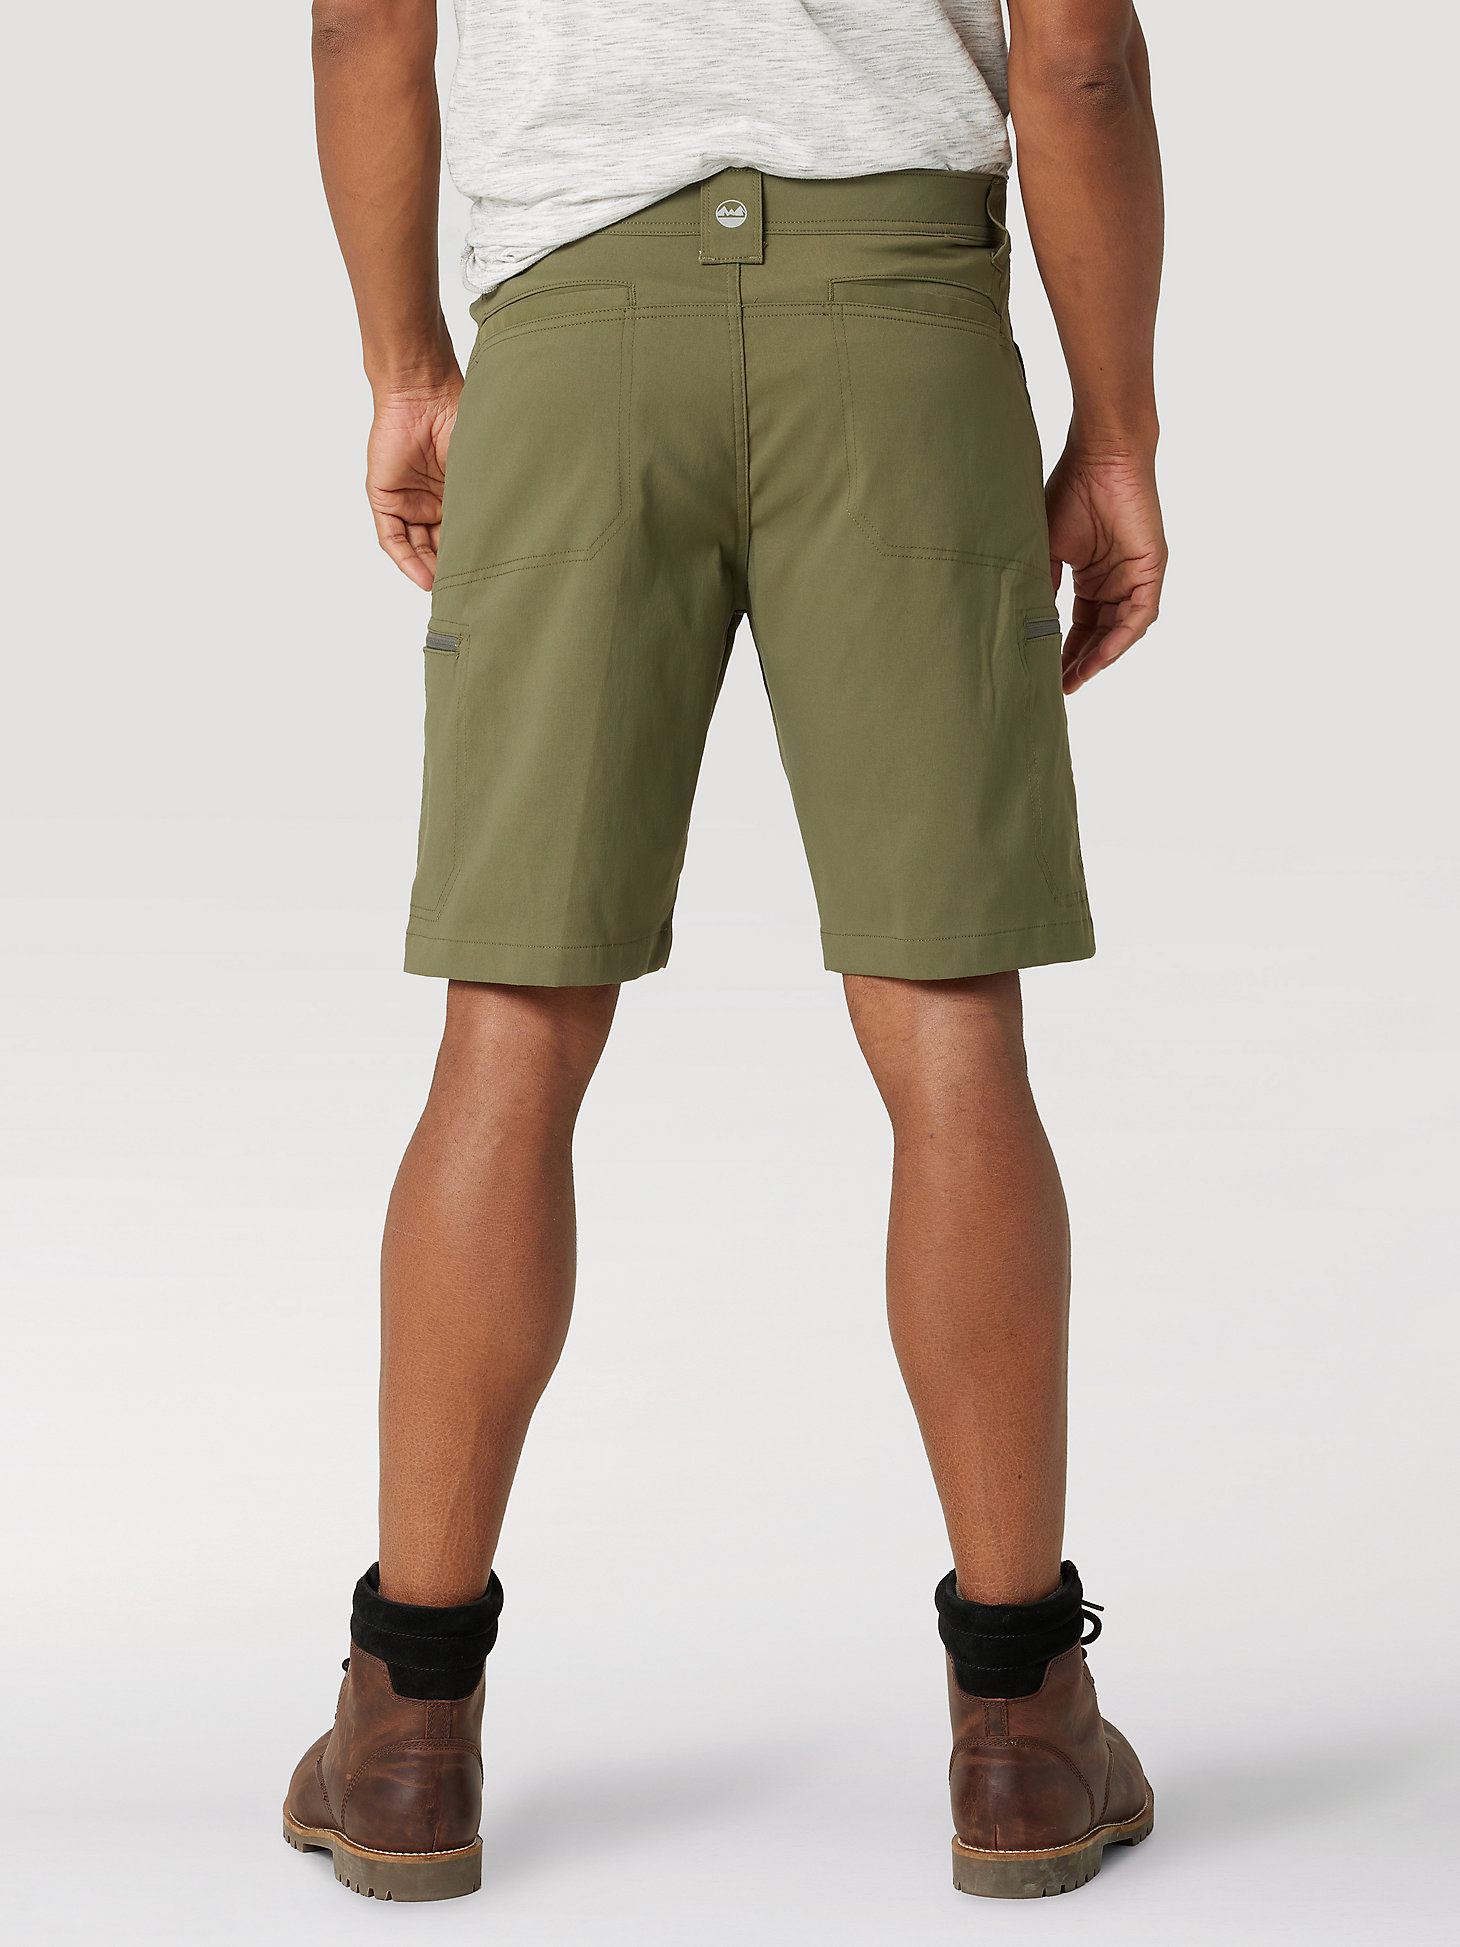 Youth Boys Size 8 Carhartt Soft Cargo Shorts Adjustable Waist 100% Cotton Khaki 